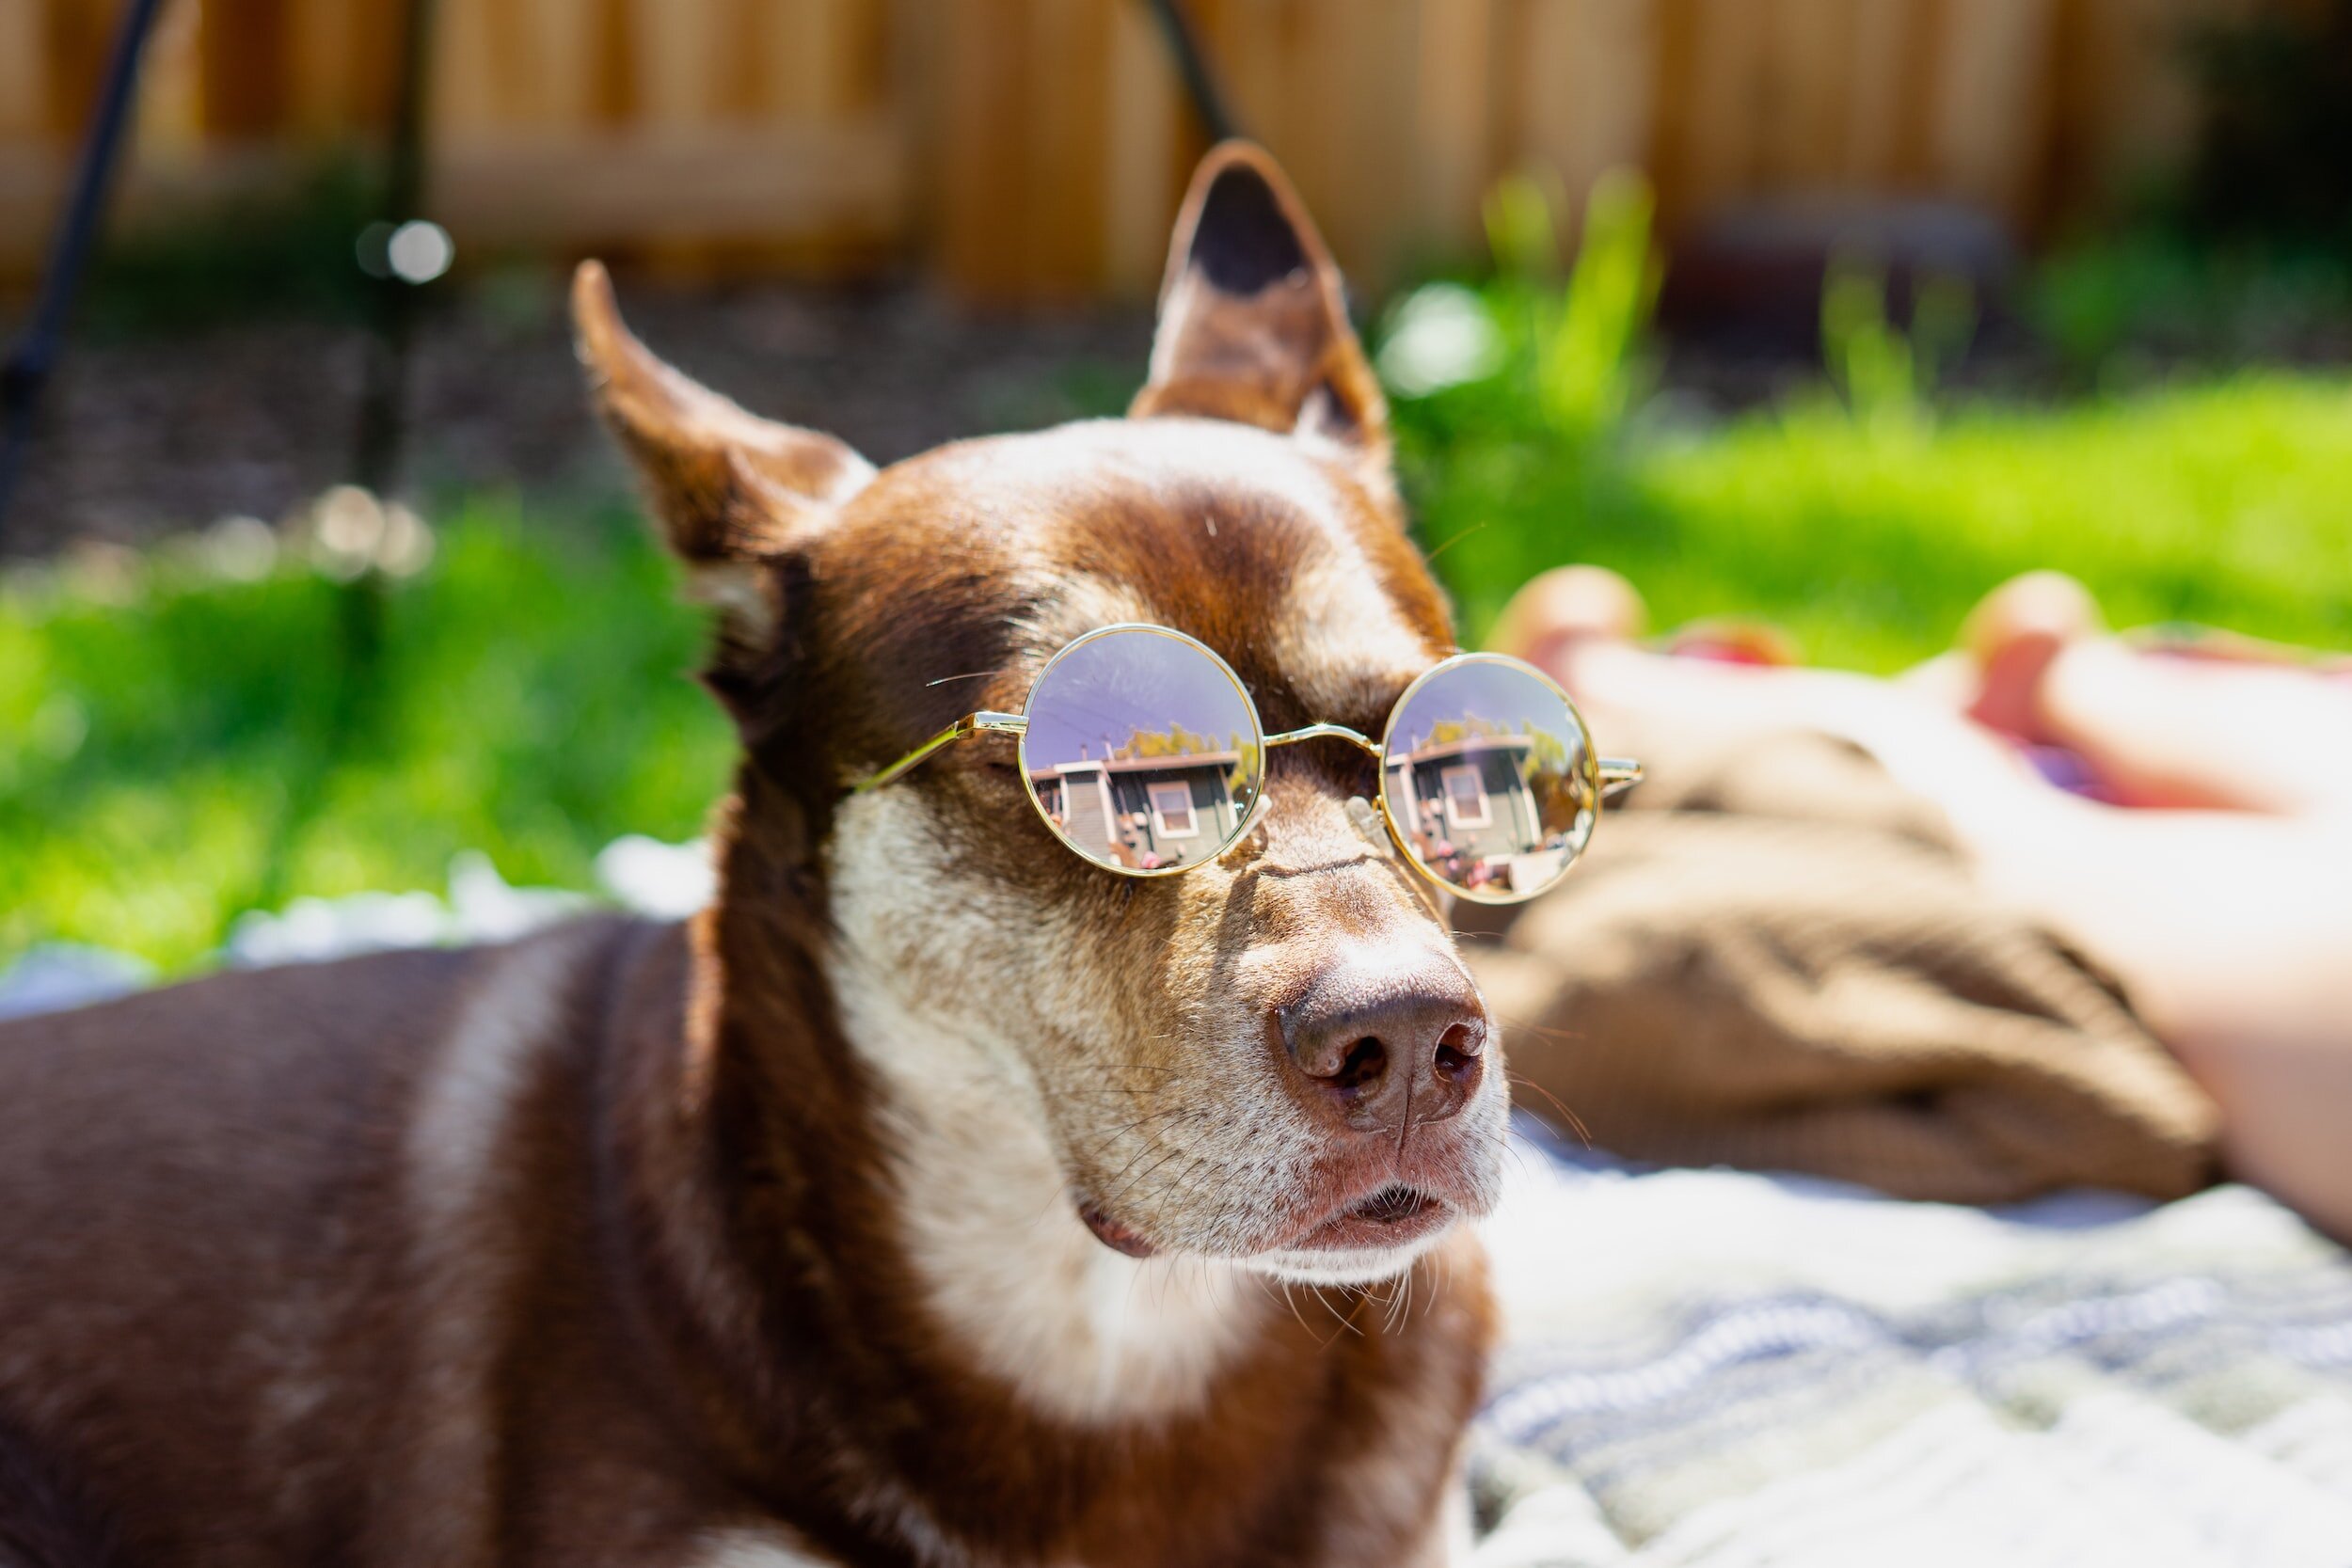 Do Dogs Need Sunscreen?